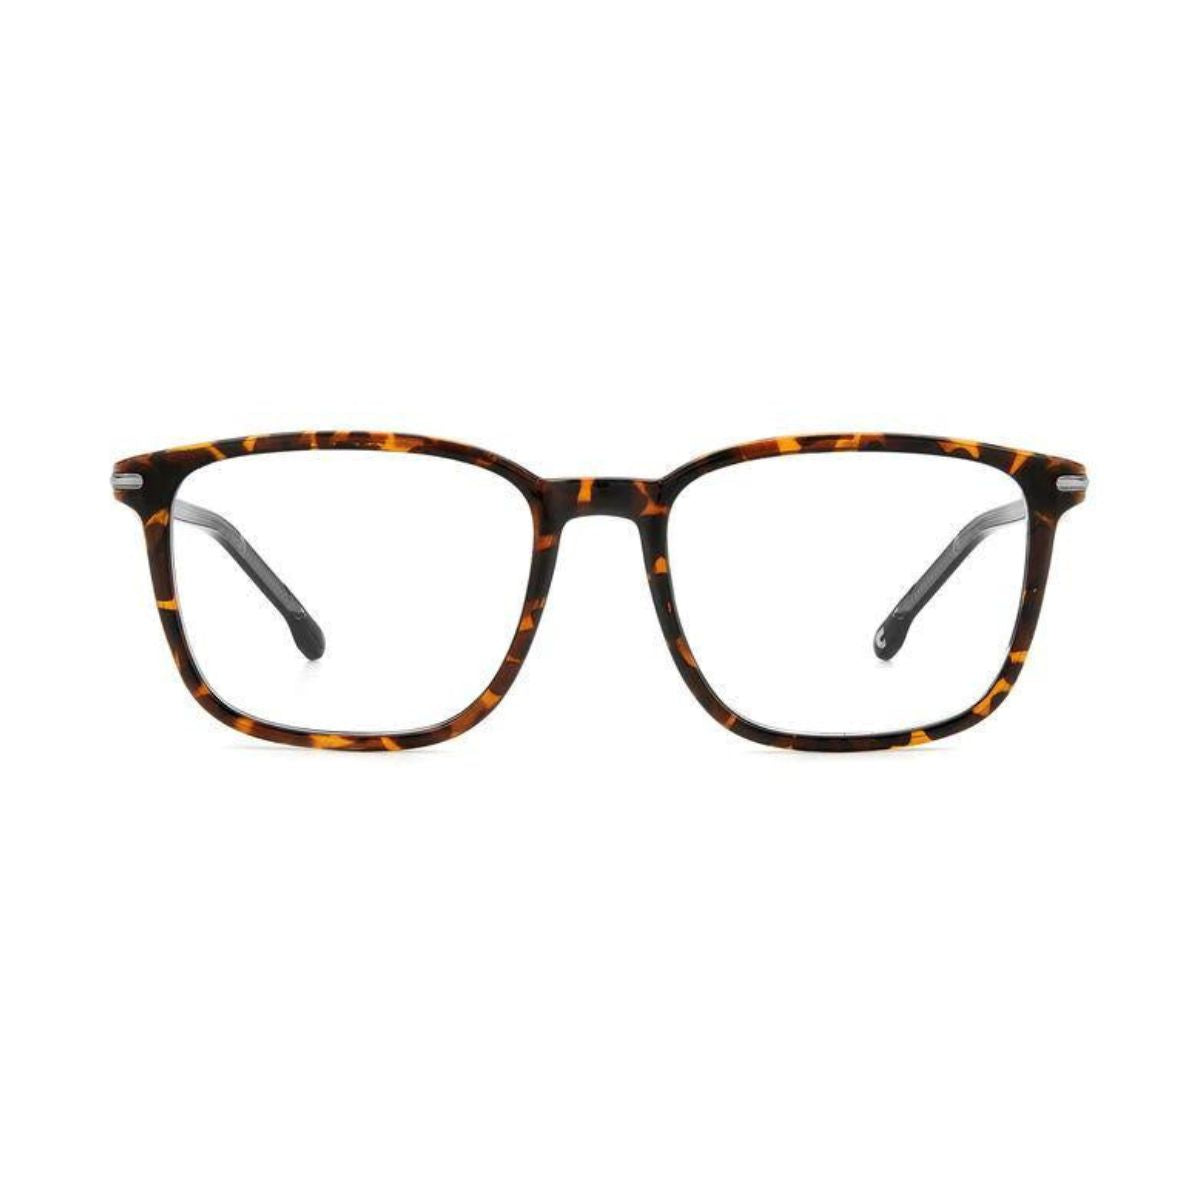 "buy Carrera 292 086 square shape power glasses frame for men's online at optorium"